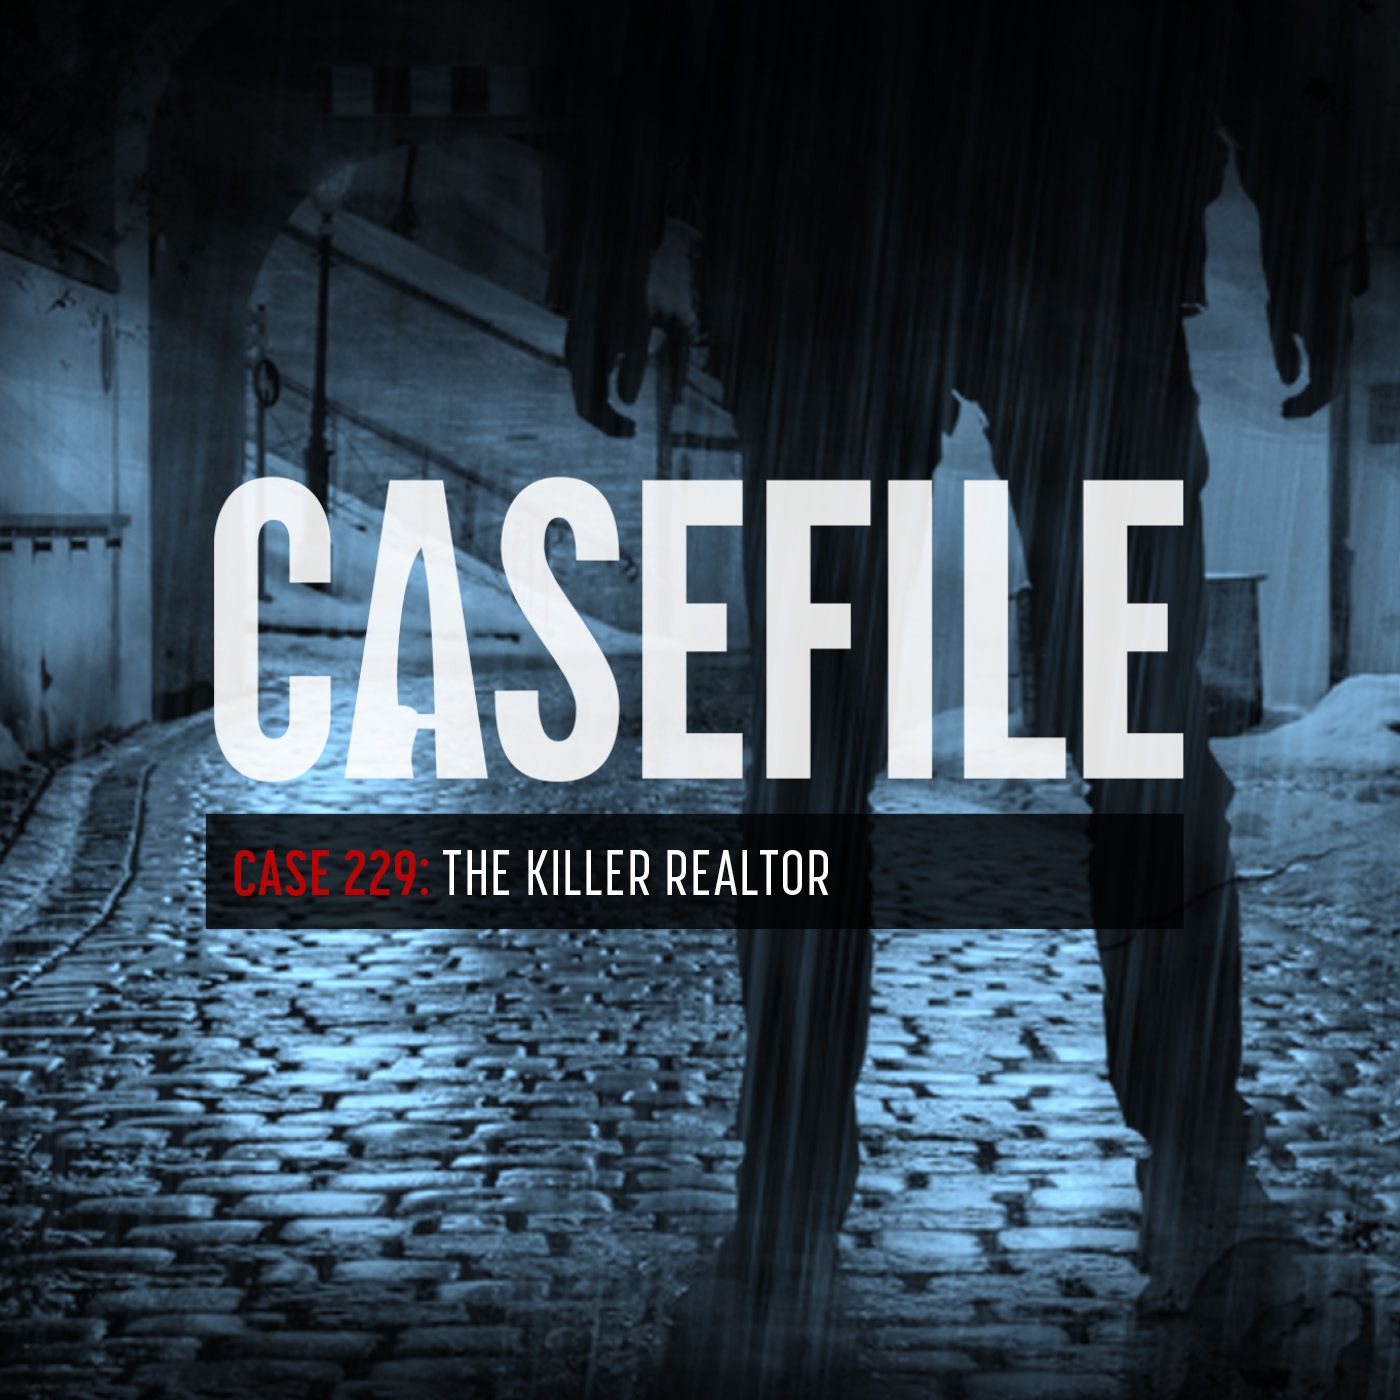 270: Case 229: The Killer Realtor